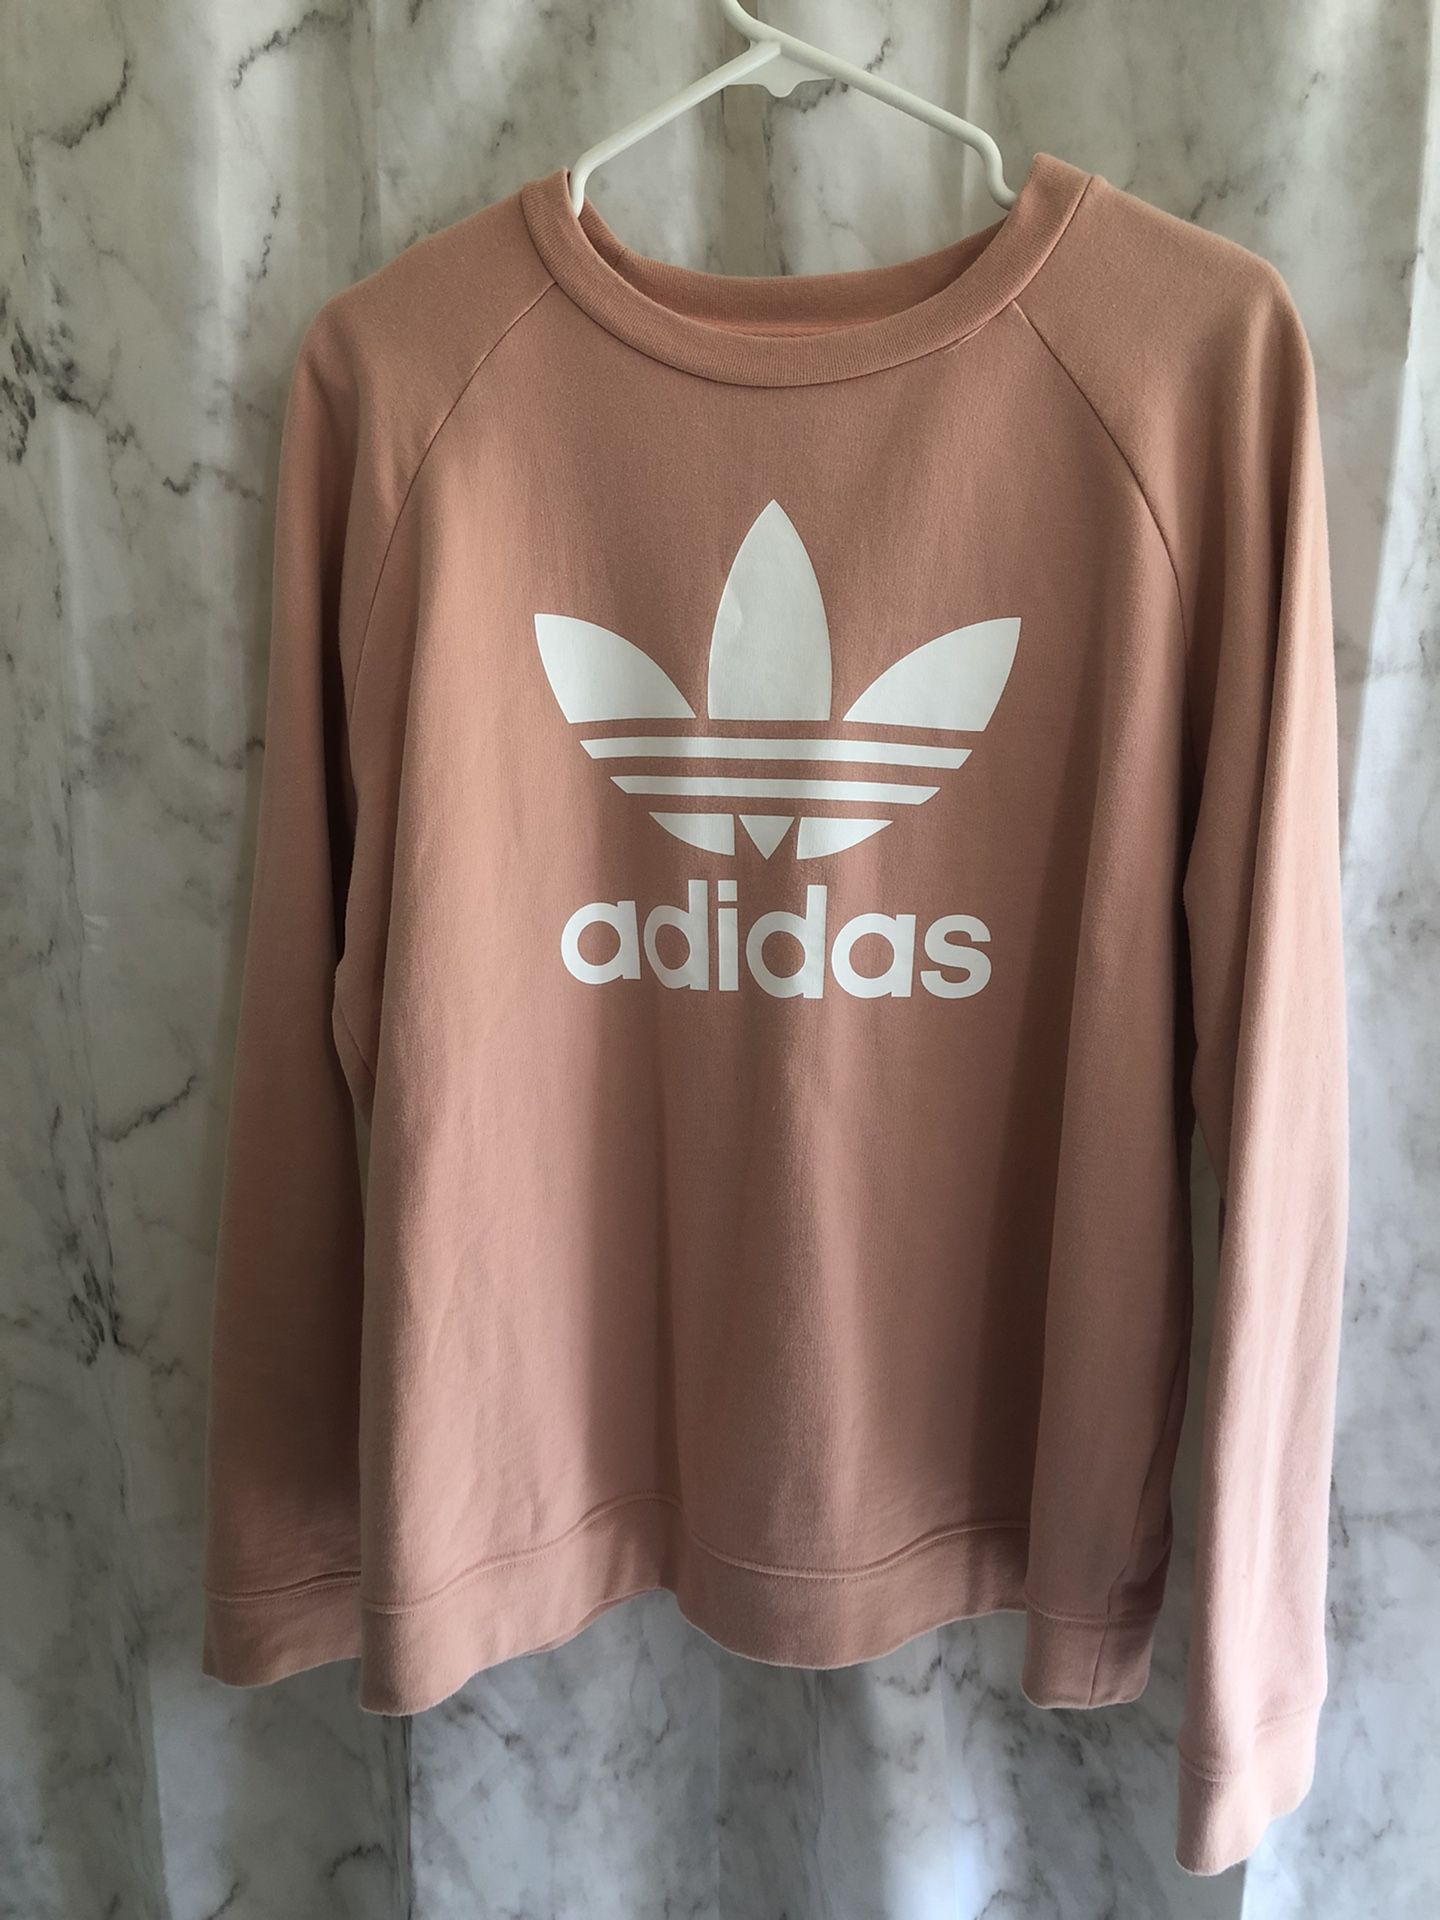 Adidas Women’s Sweatshirt